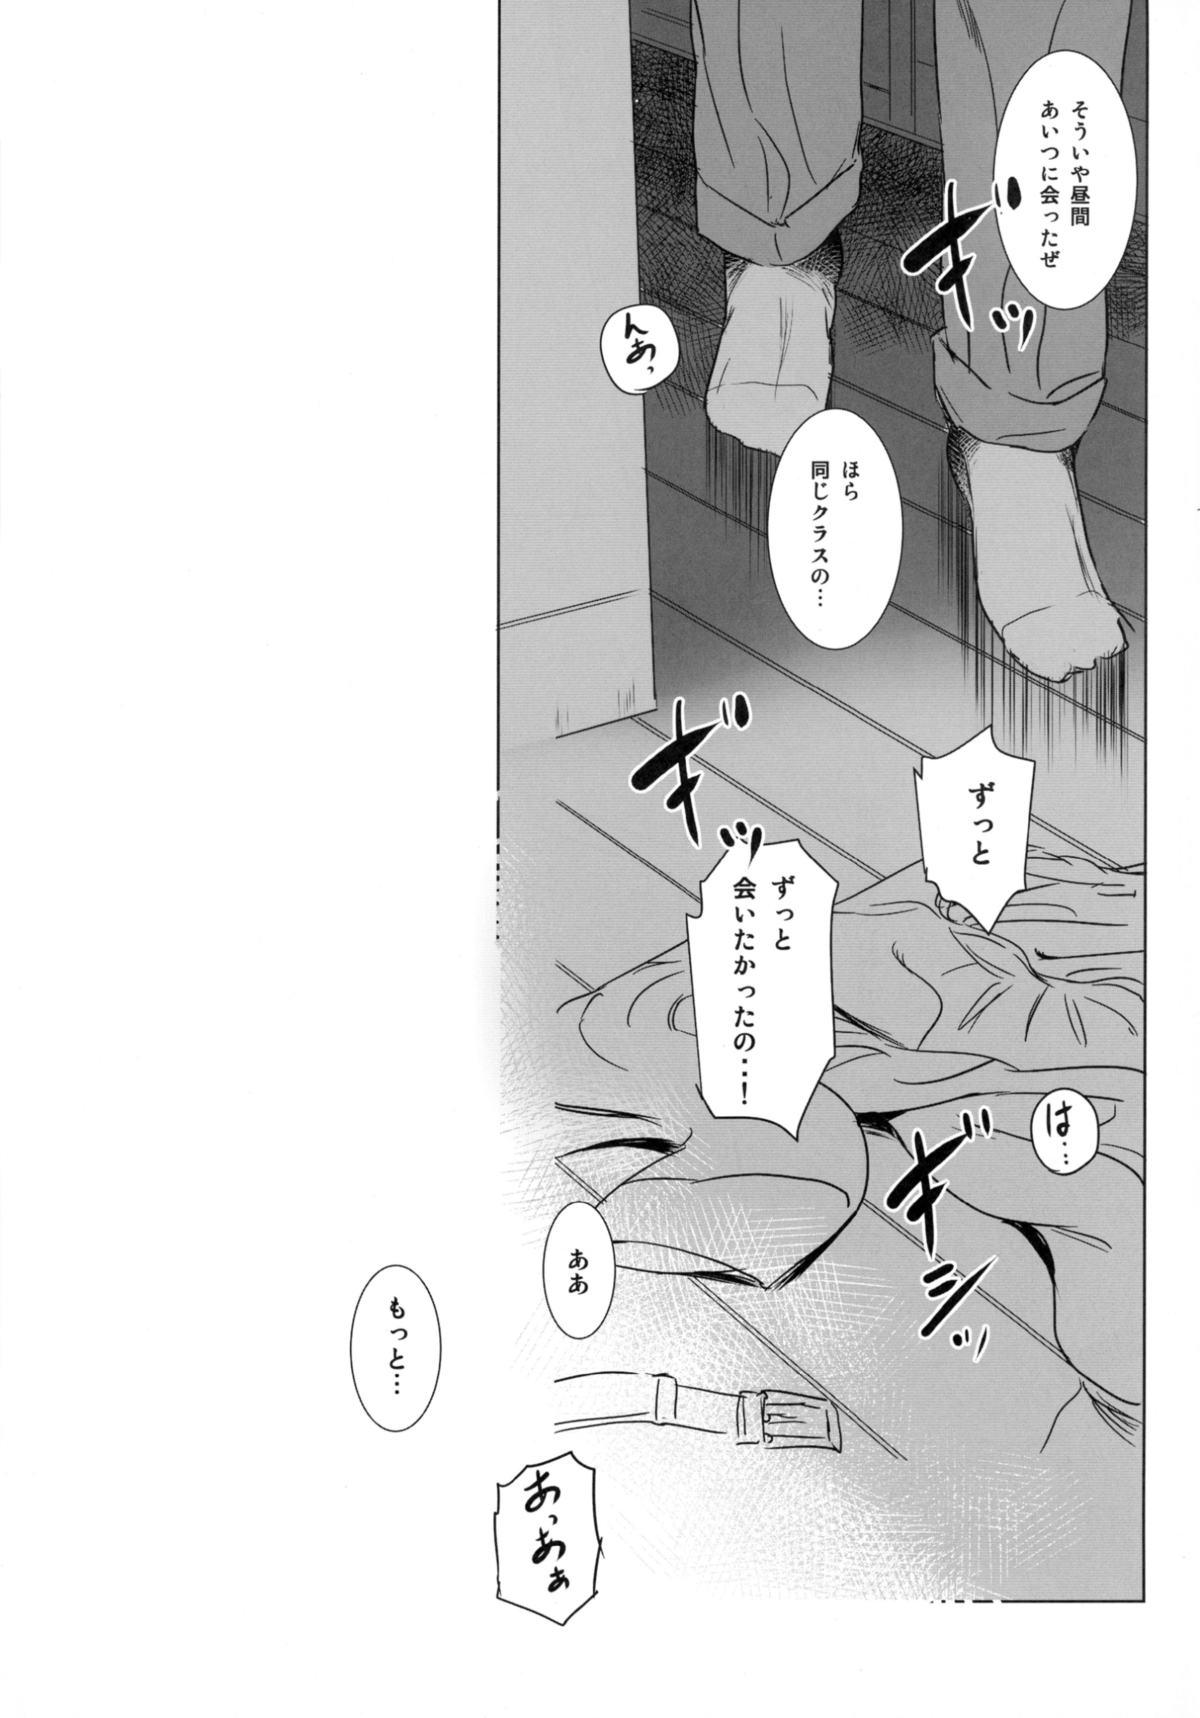 Story of the 'N' Situation - Situation#3 Mukashi no Otoko 38